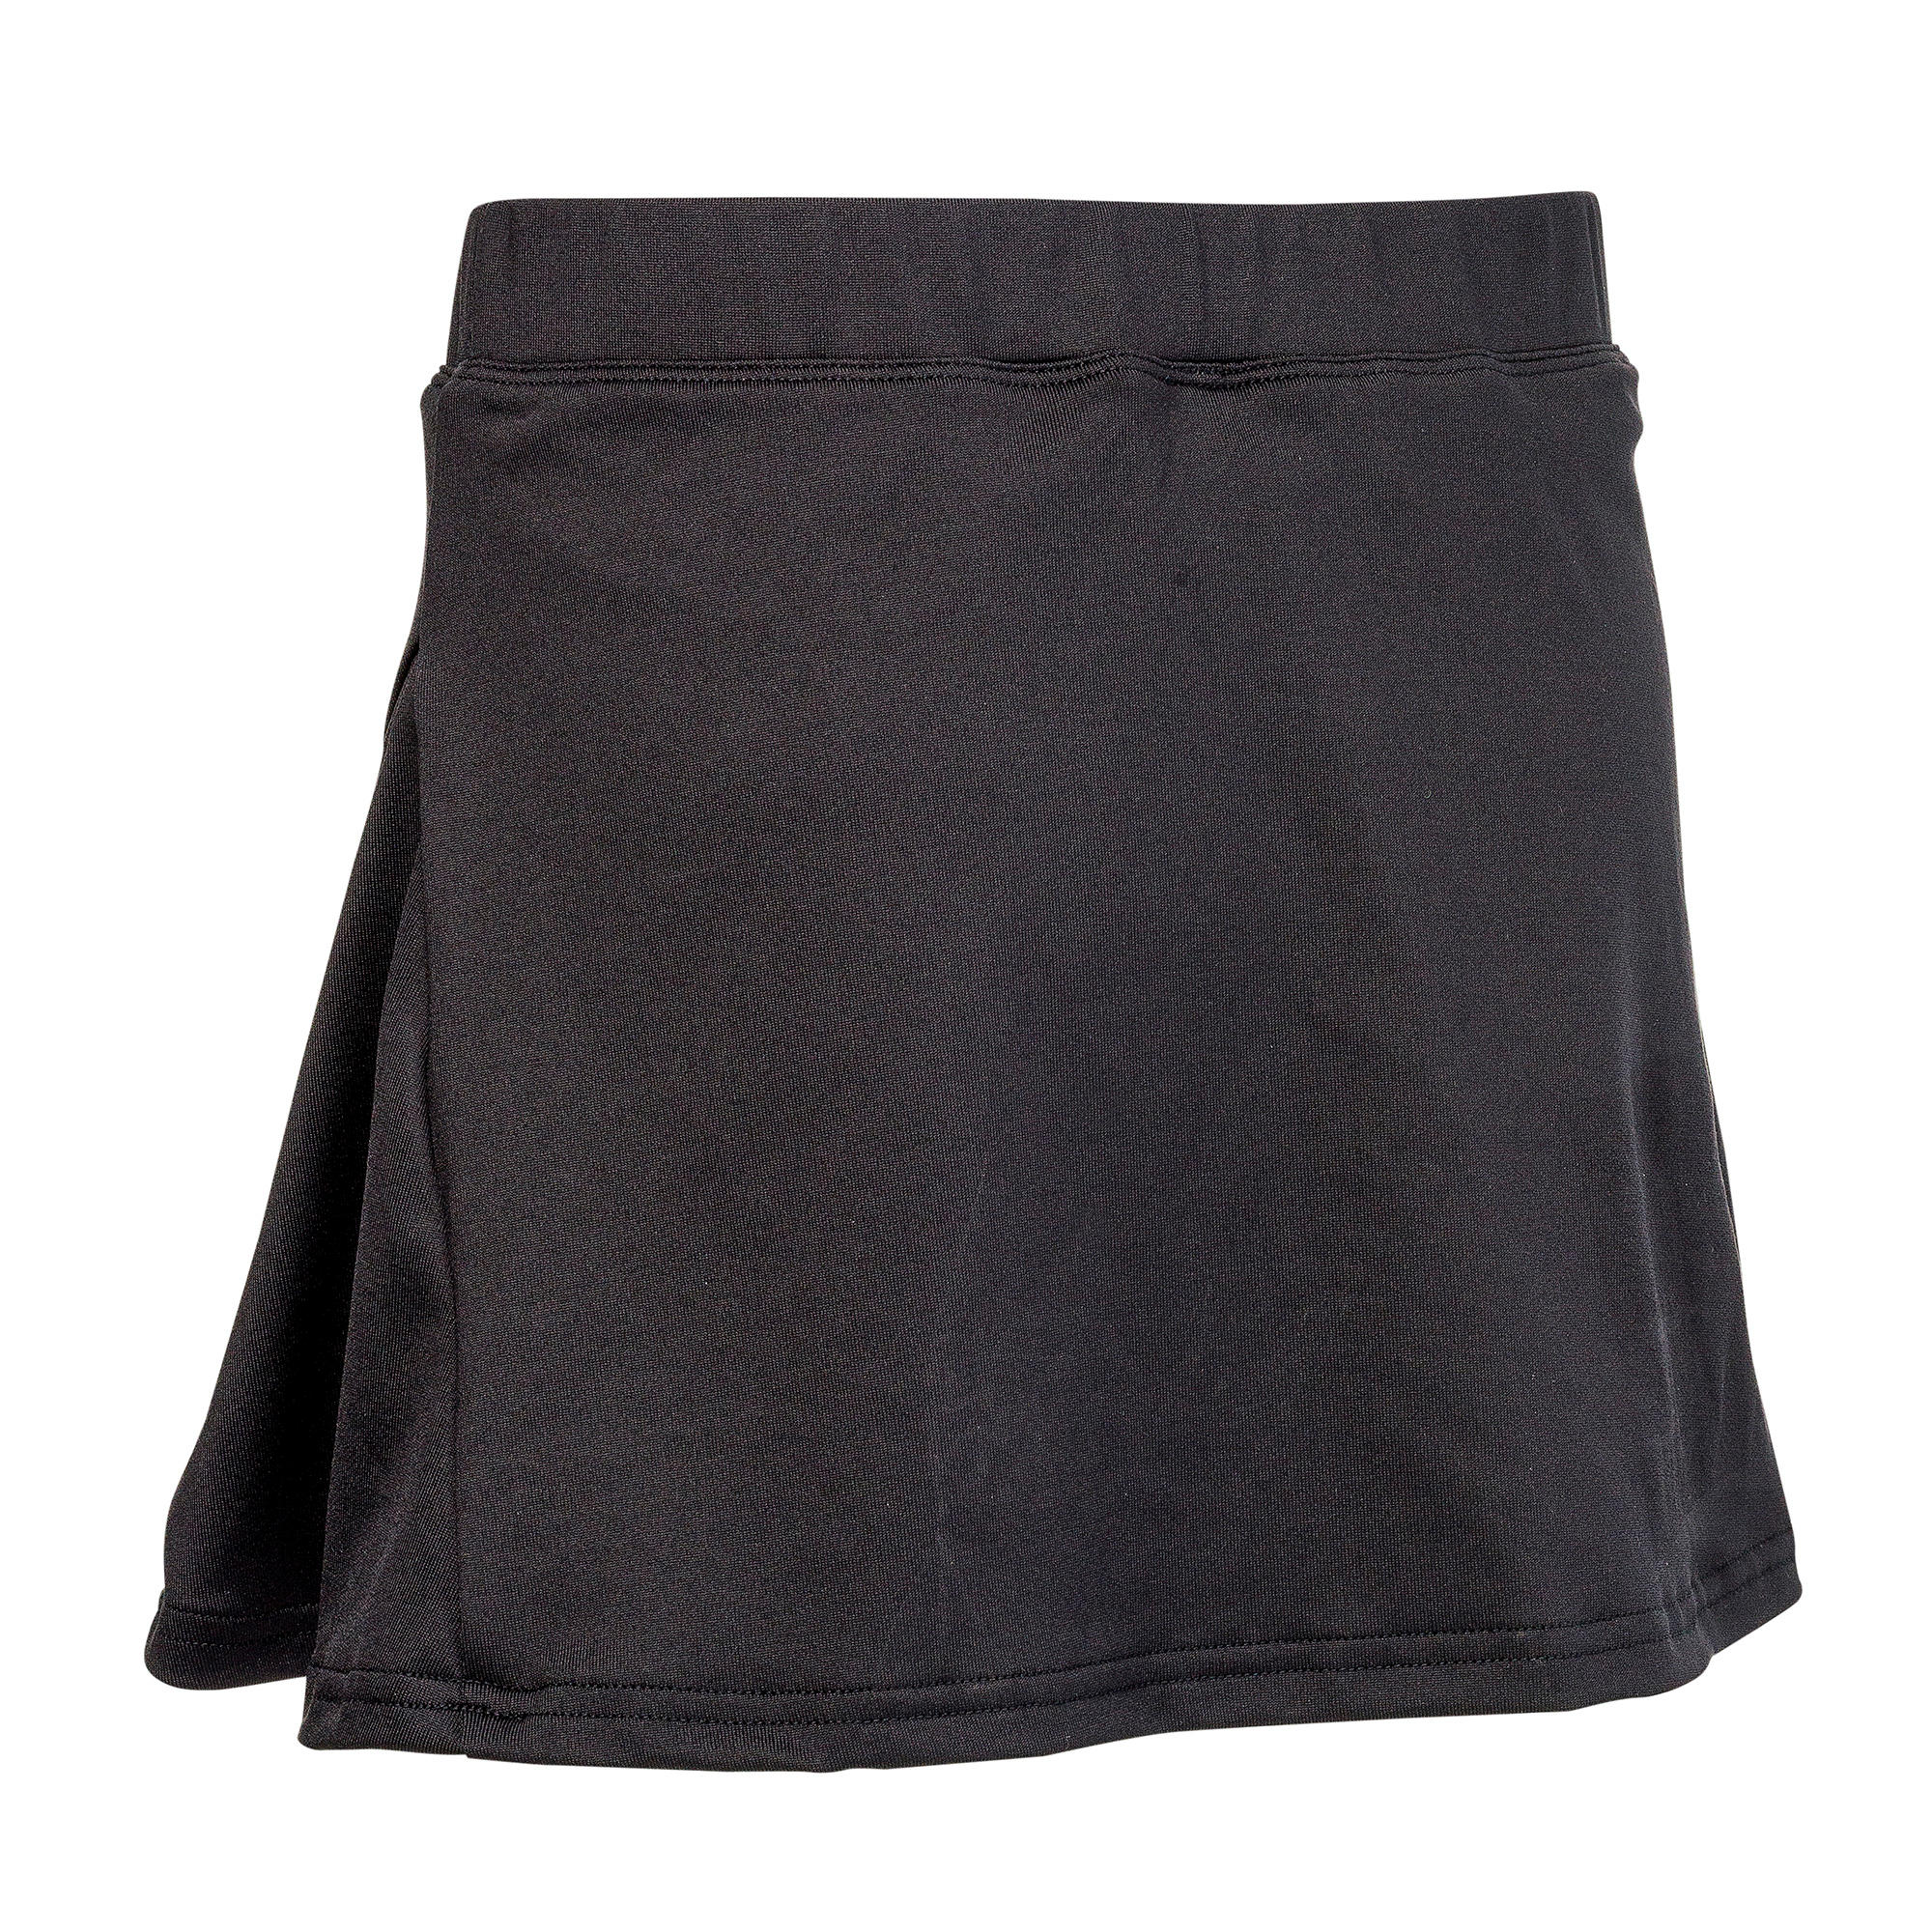 FH500 Girls' Field Hockey Skirt - Black 2/4